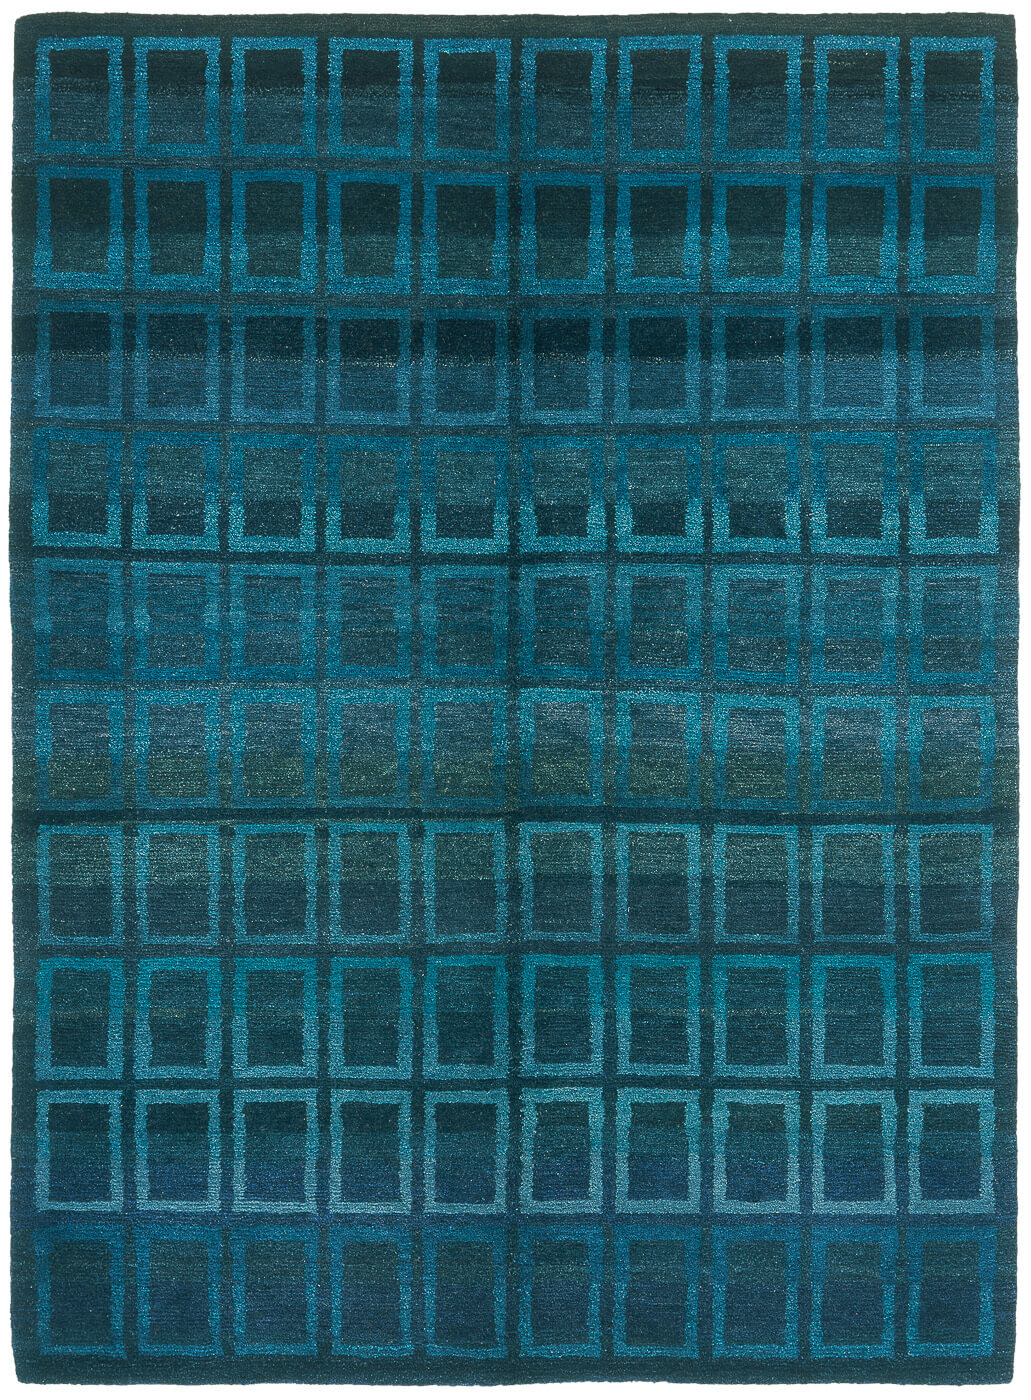 Gamba Zar Gunti Blue Rug ☞ Size: 200 x 300 cm